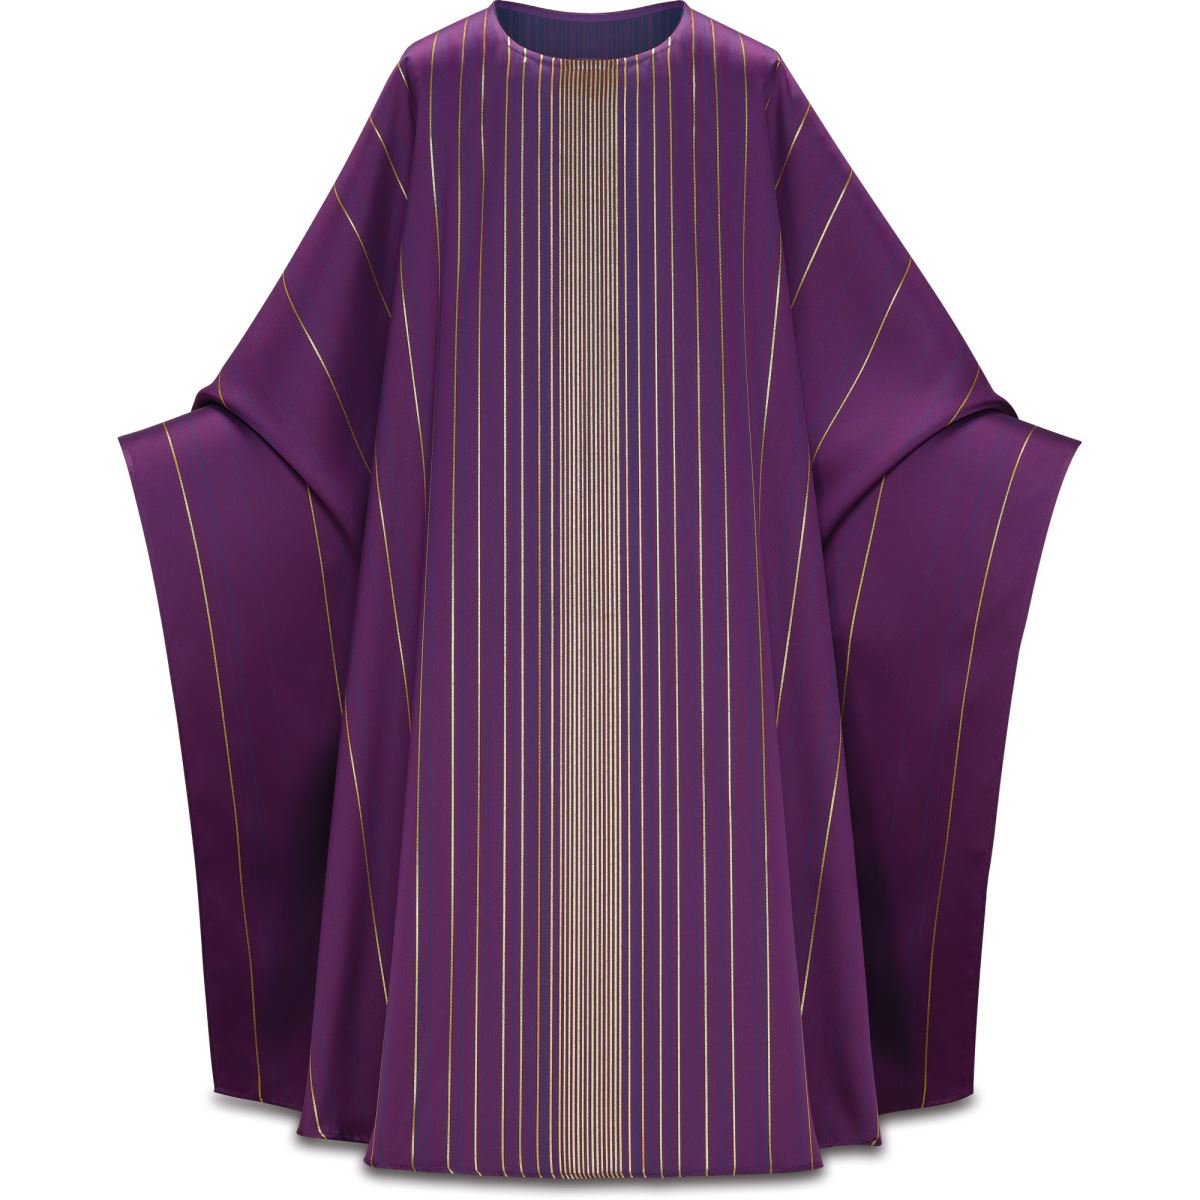 Monastic Chasuble in Purple Linus Fabric with Plain Collar 